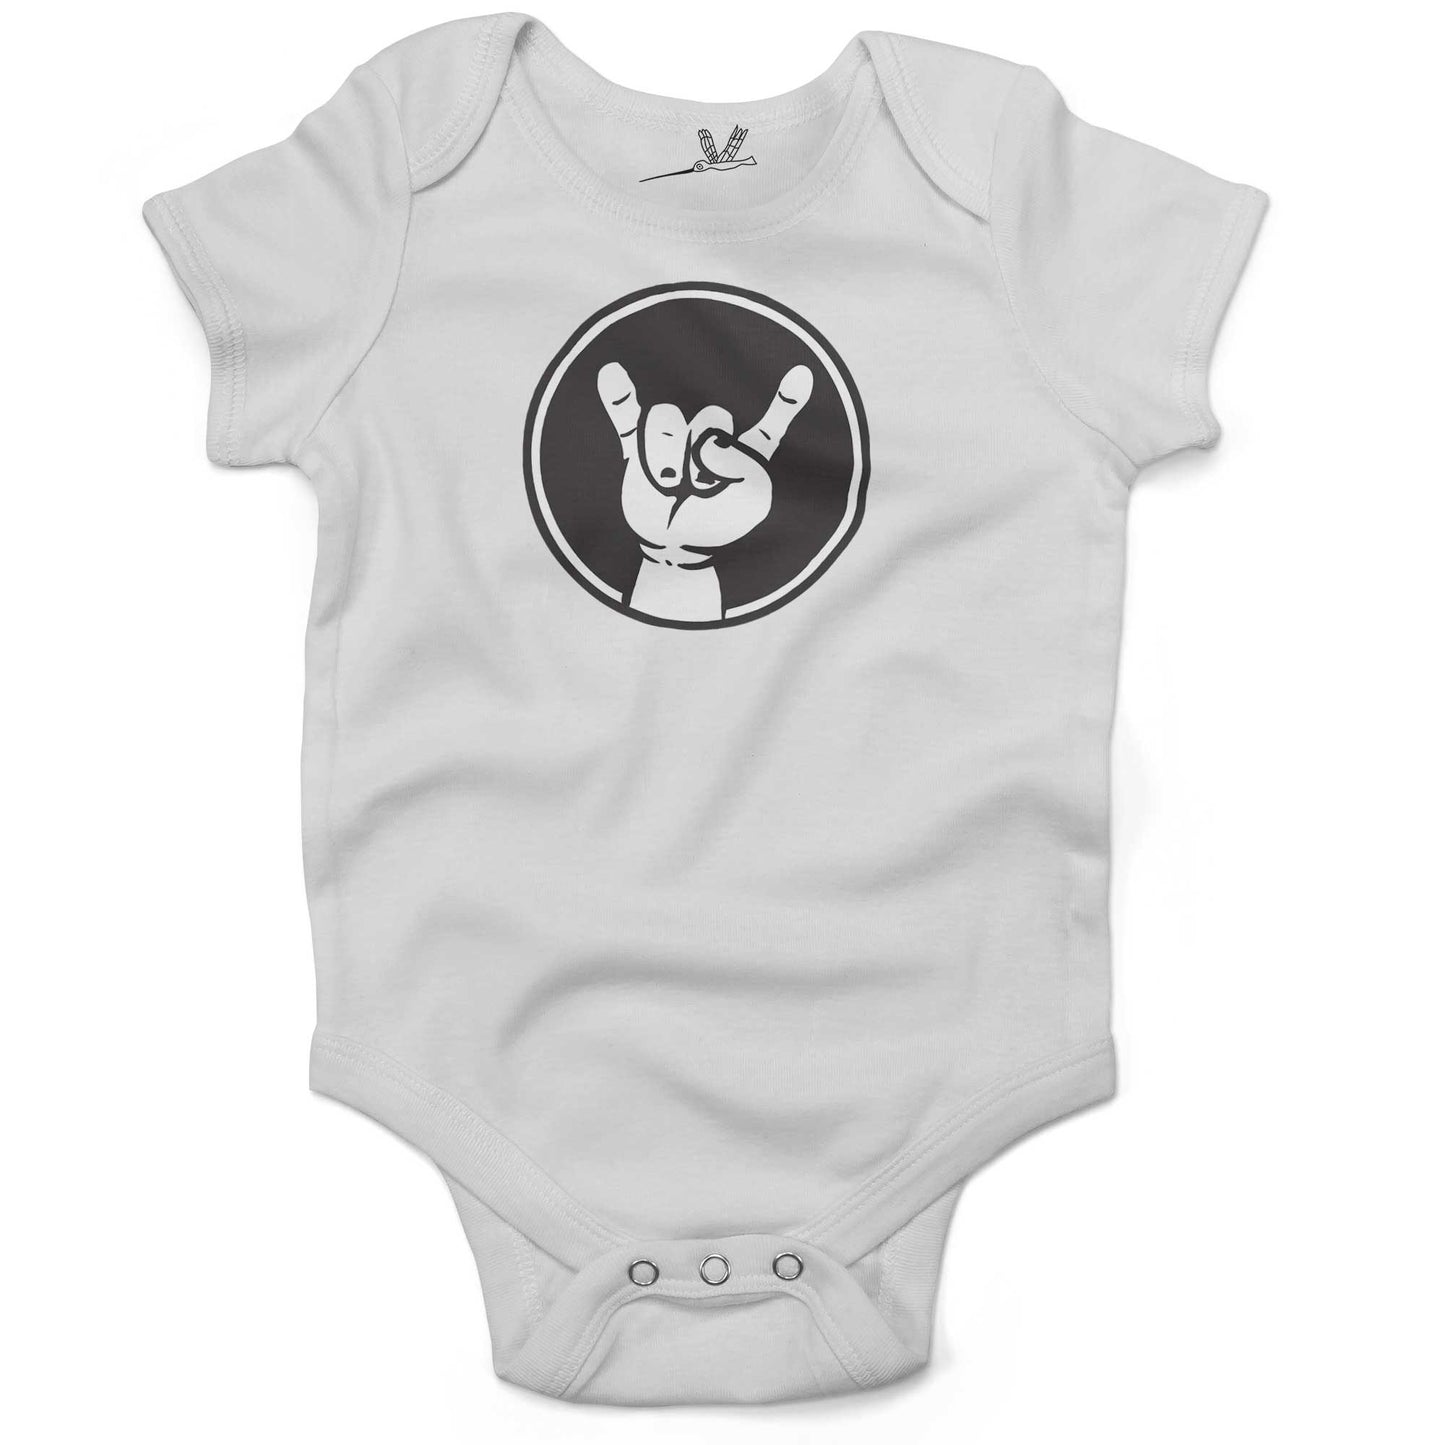 Rock Hand Symbol Infant Bodysuit or Raglan Tee-White-3-6 months